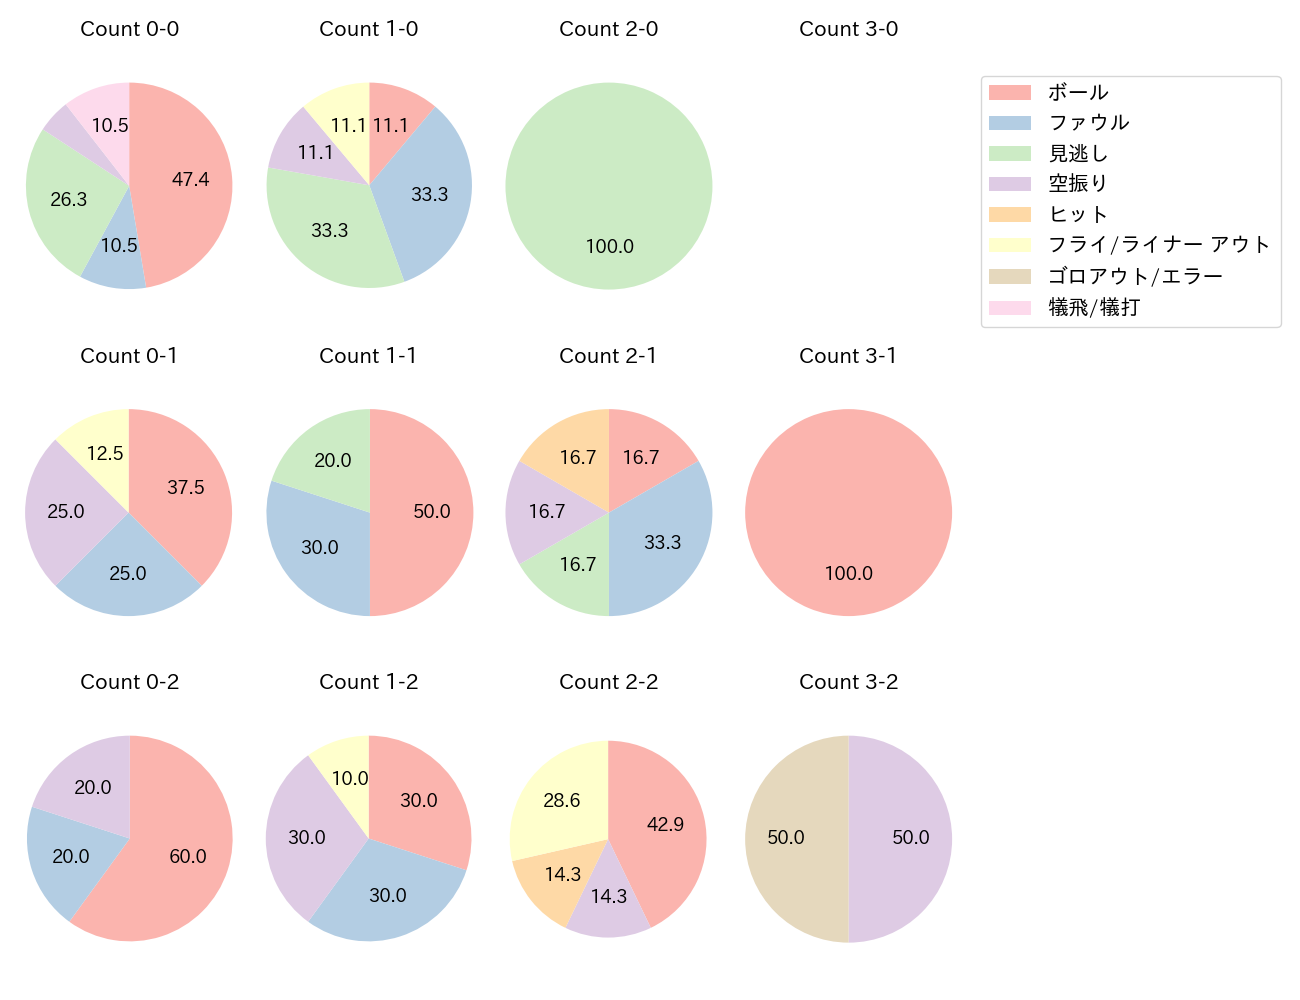 太田 光の球数分布(2022年8月)